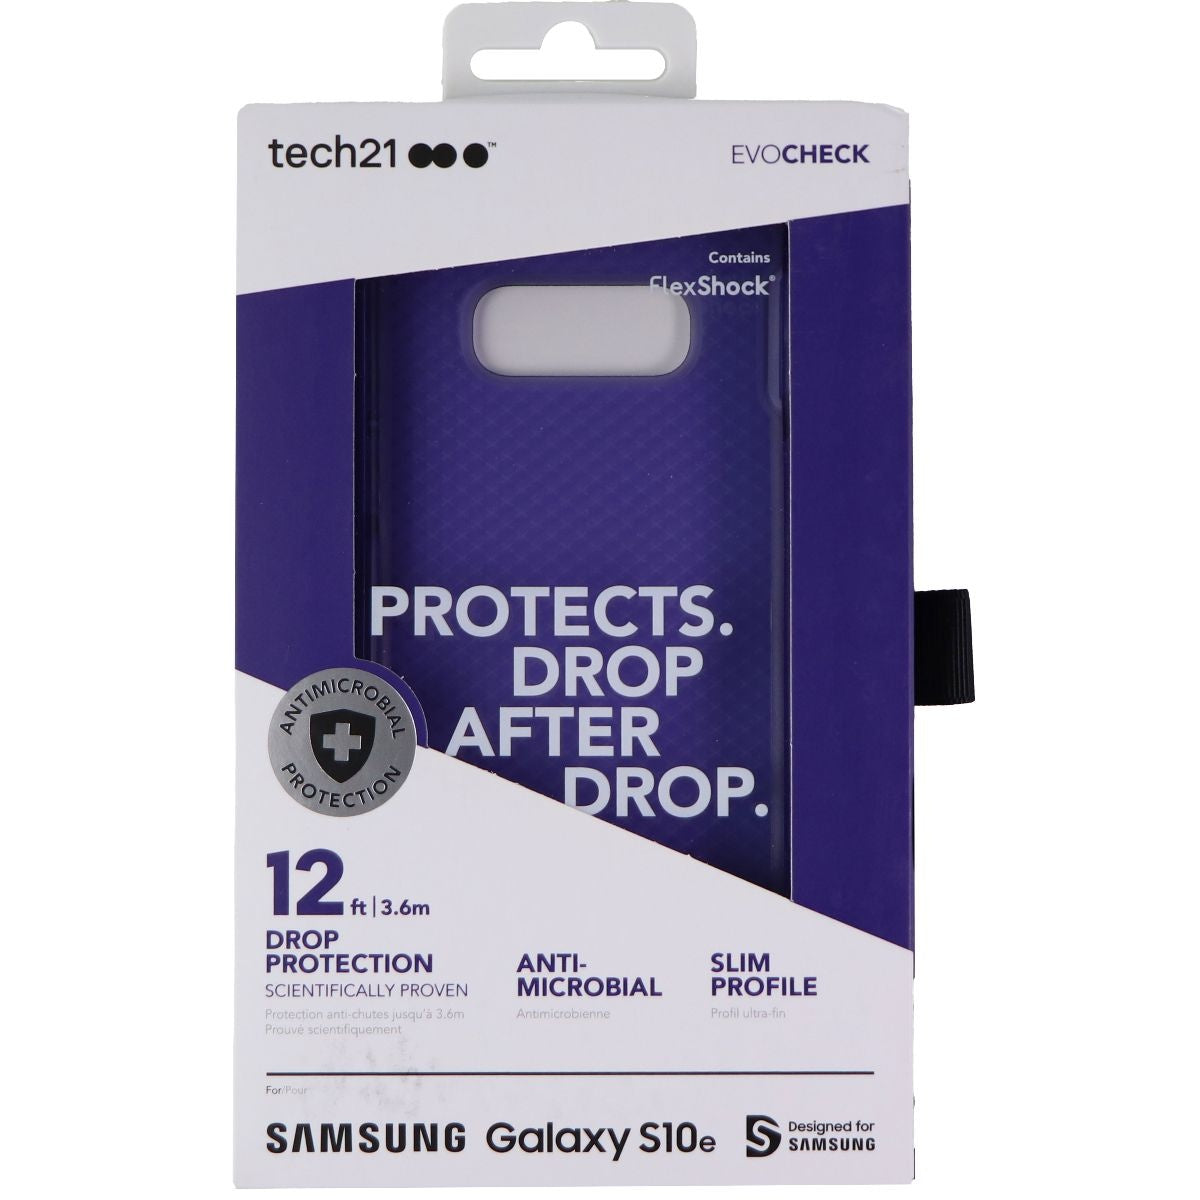 Tech21 Evo Check case for Samsung Galaxy S10e - Ultra Violet